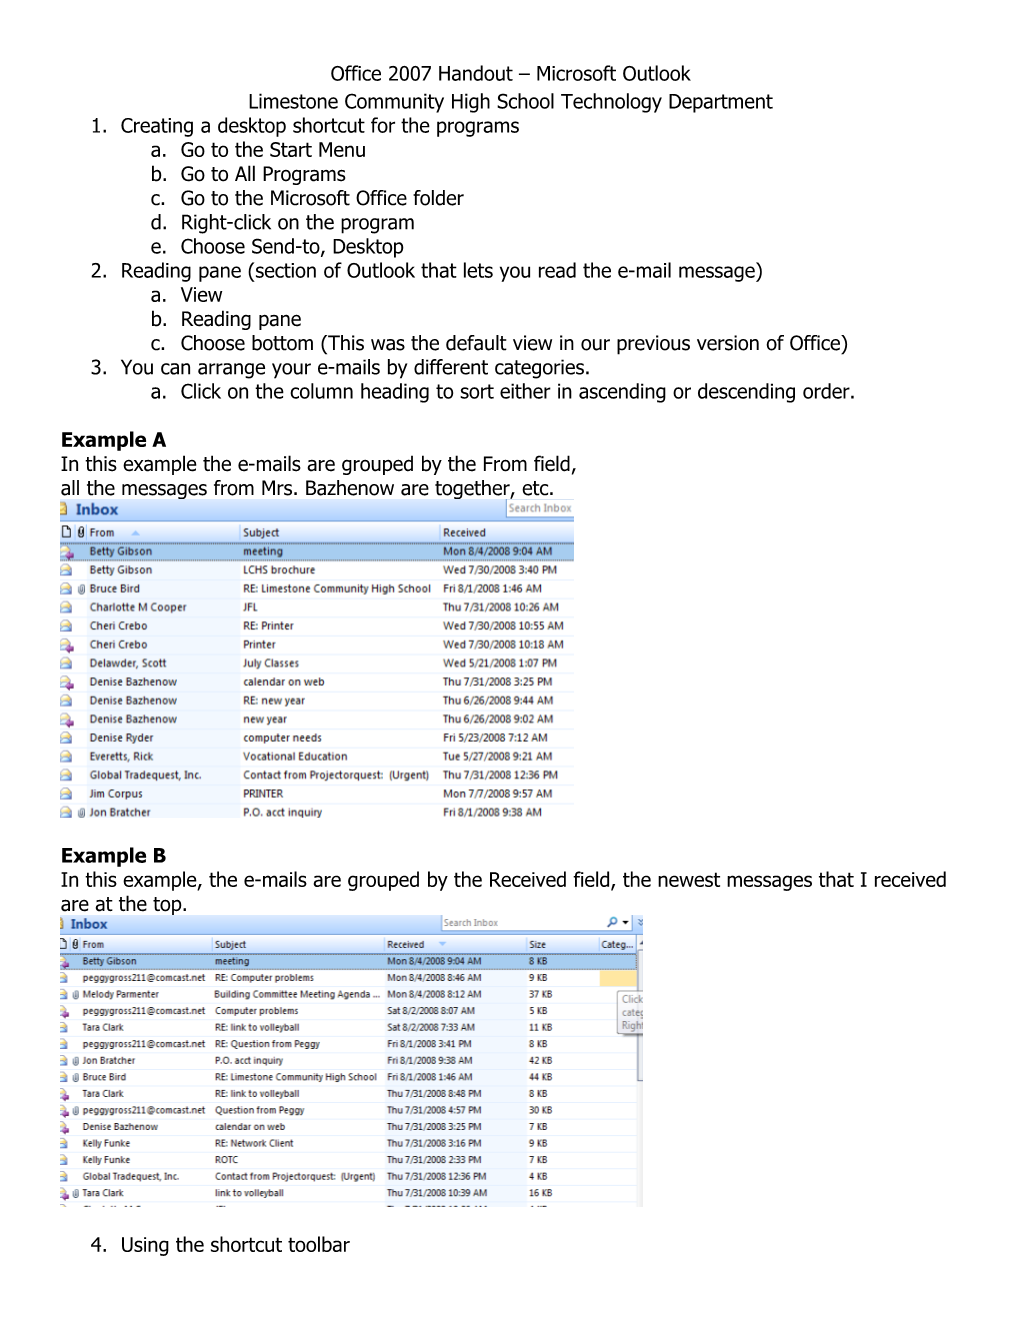 Office 2007 Handout Microsoft Outlook